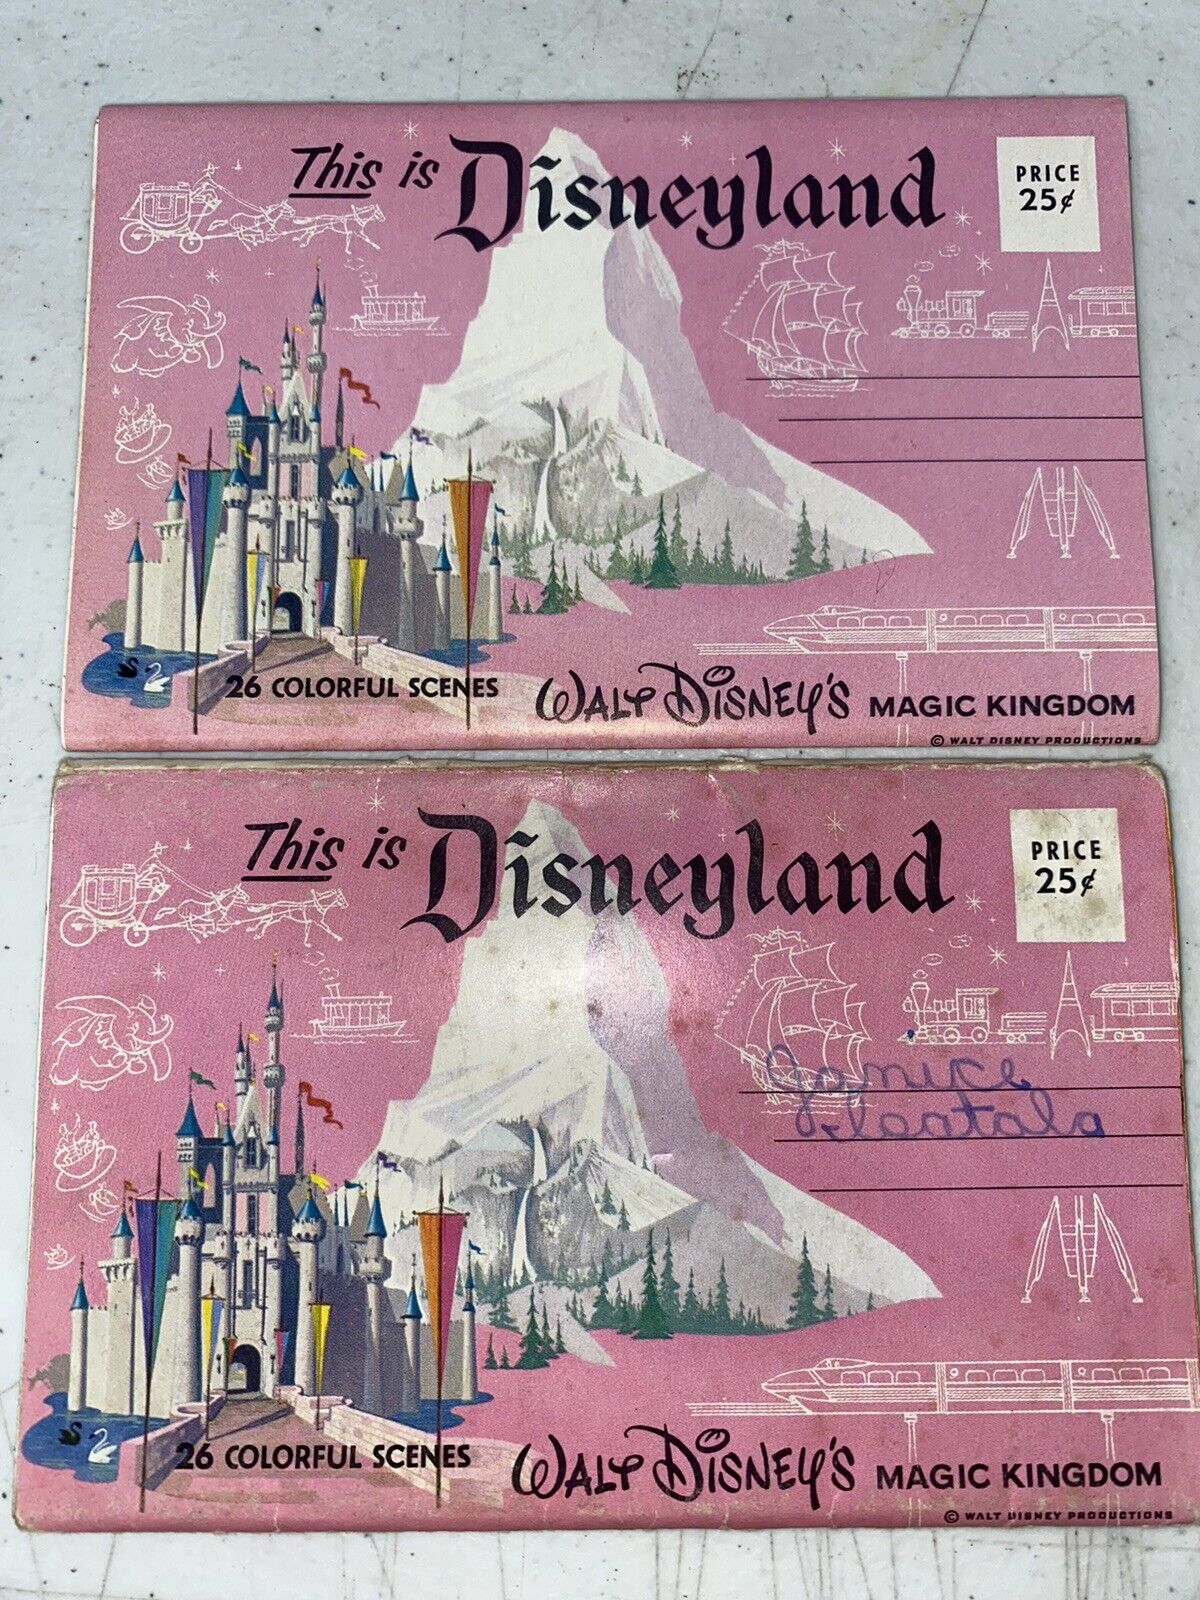 VTG Walt Disneys Magical Kingdom Disneyland Photo Book Lot/2 26 Scenes/Book